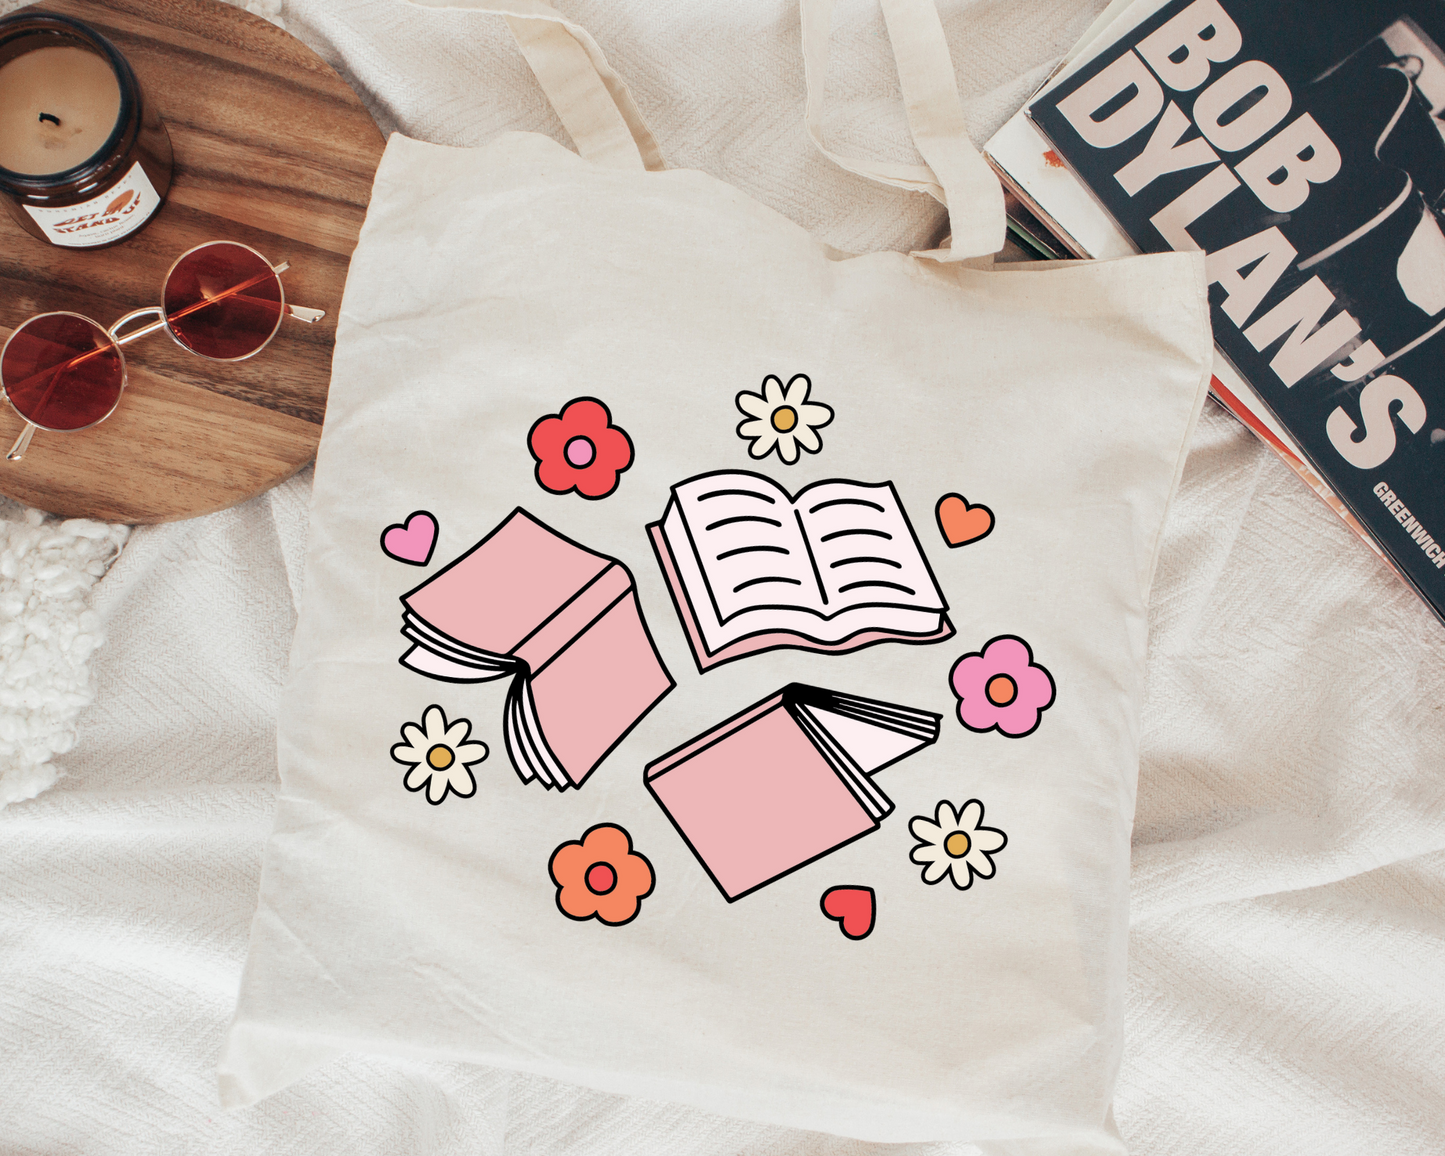 FREE Floral Book SVG | Cute Book SVG | Book Lover SVG